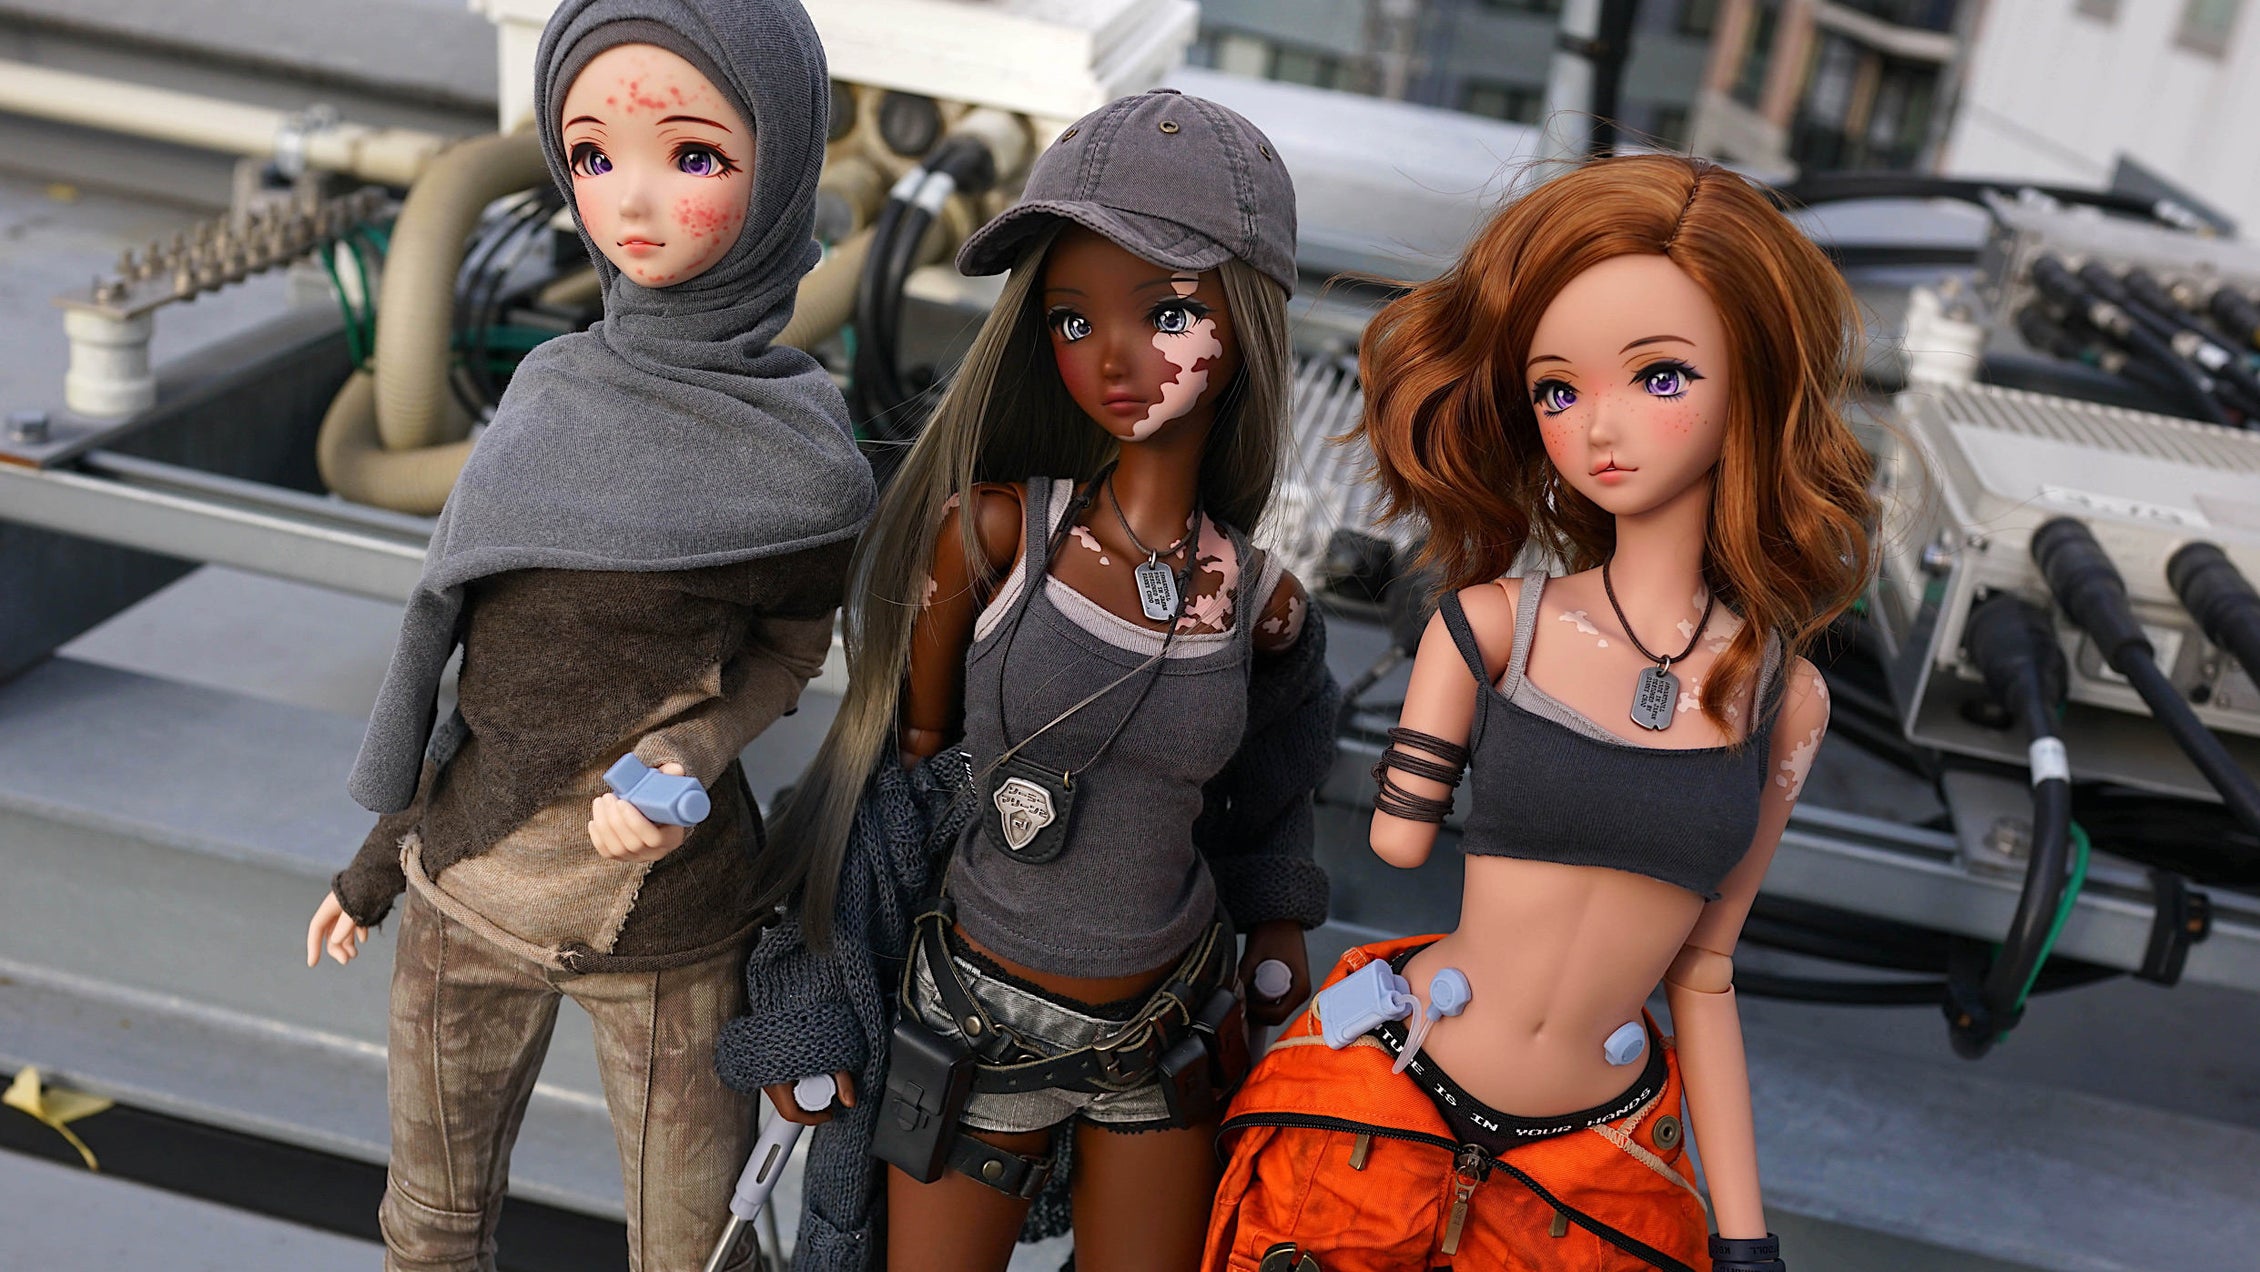 Fashion Dolls - Custom Design Minifigures –